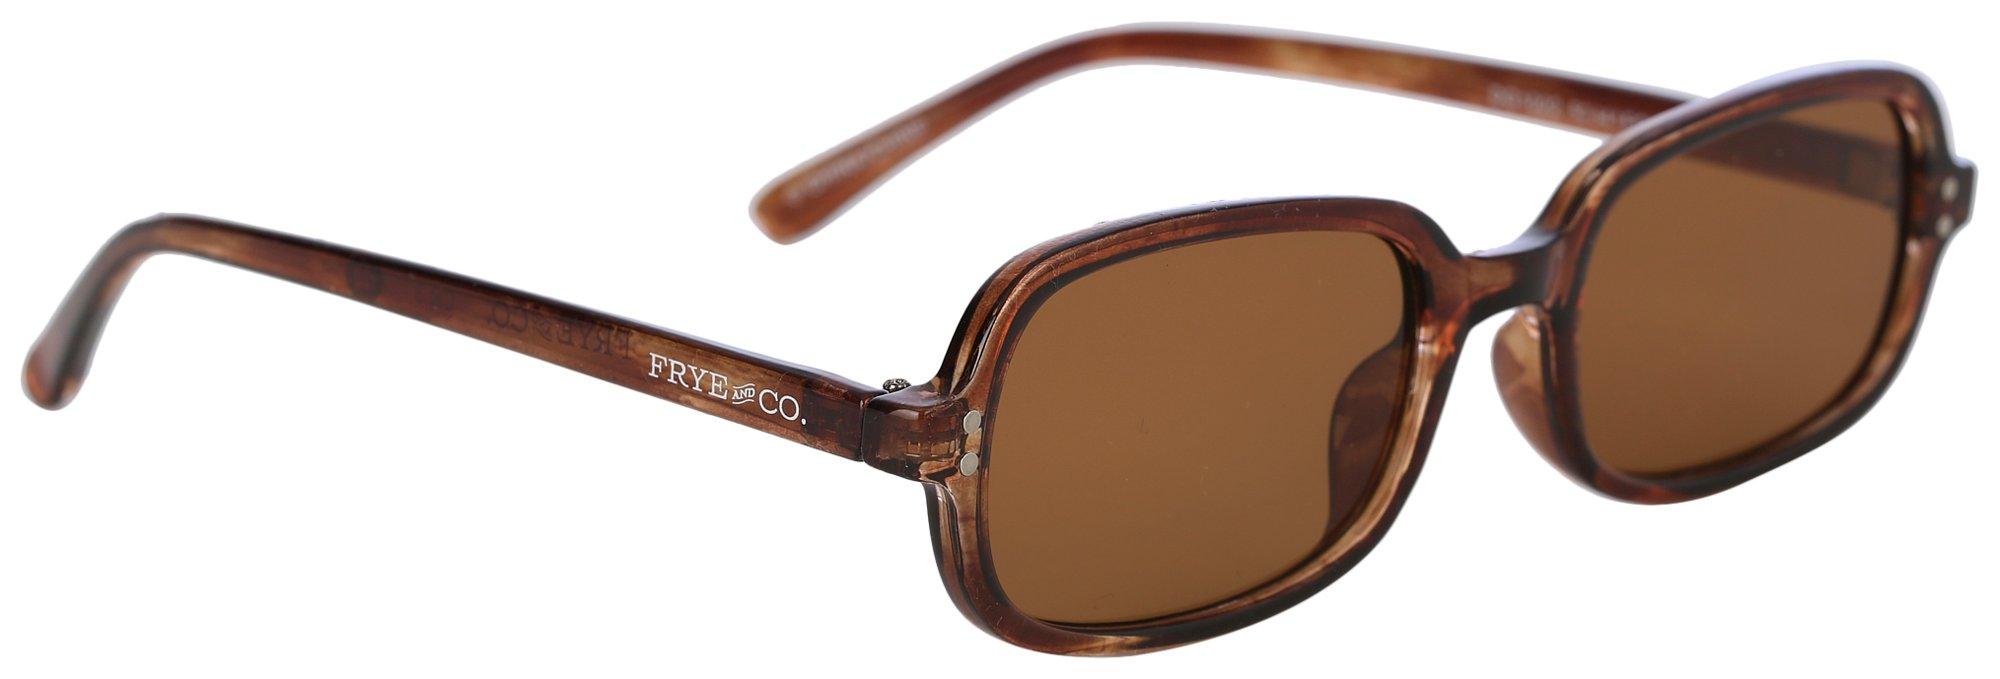 FRYE & CO Womens Rectangular Translucent Frame Sunglasses